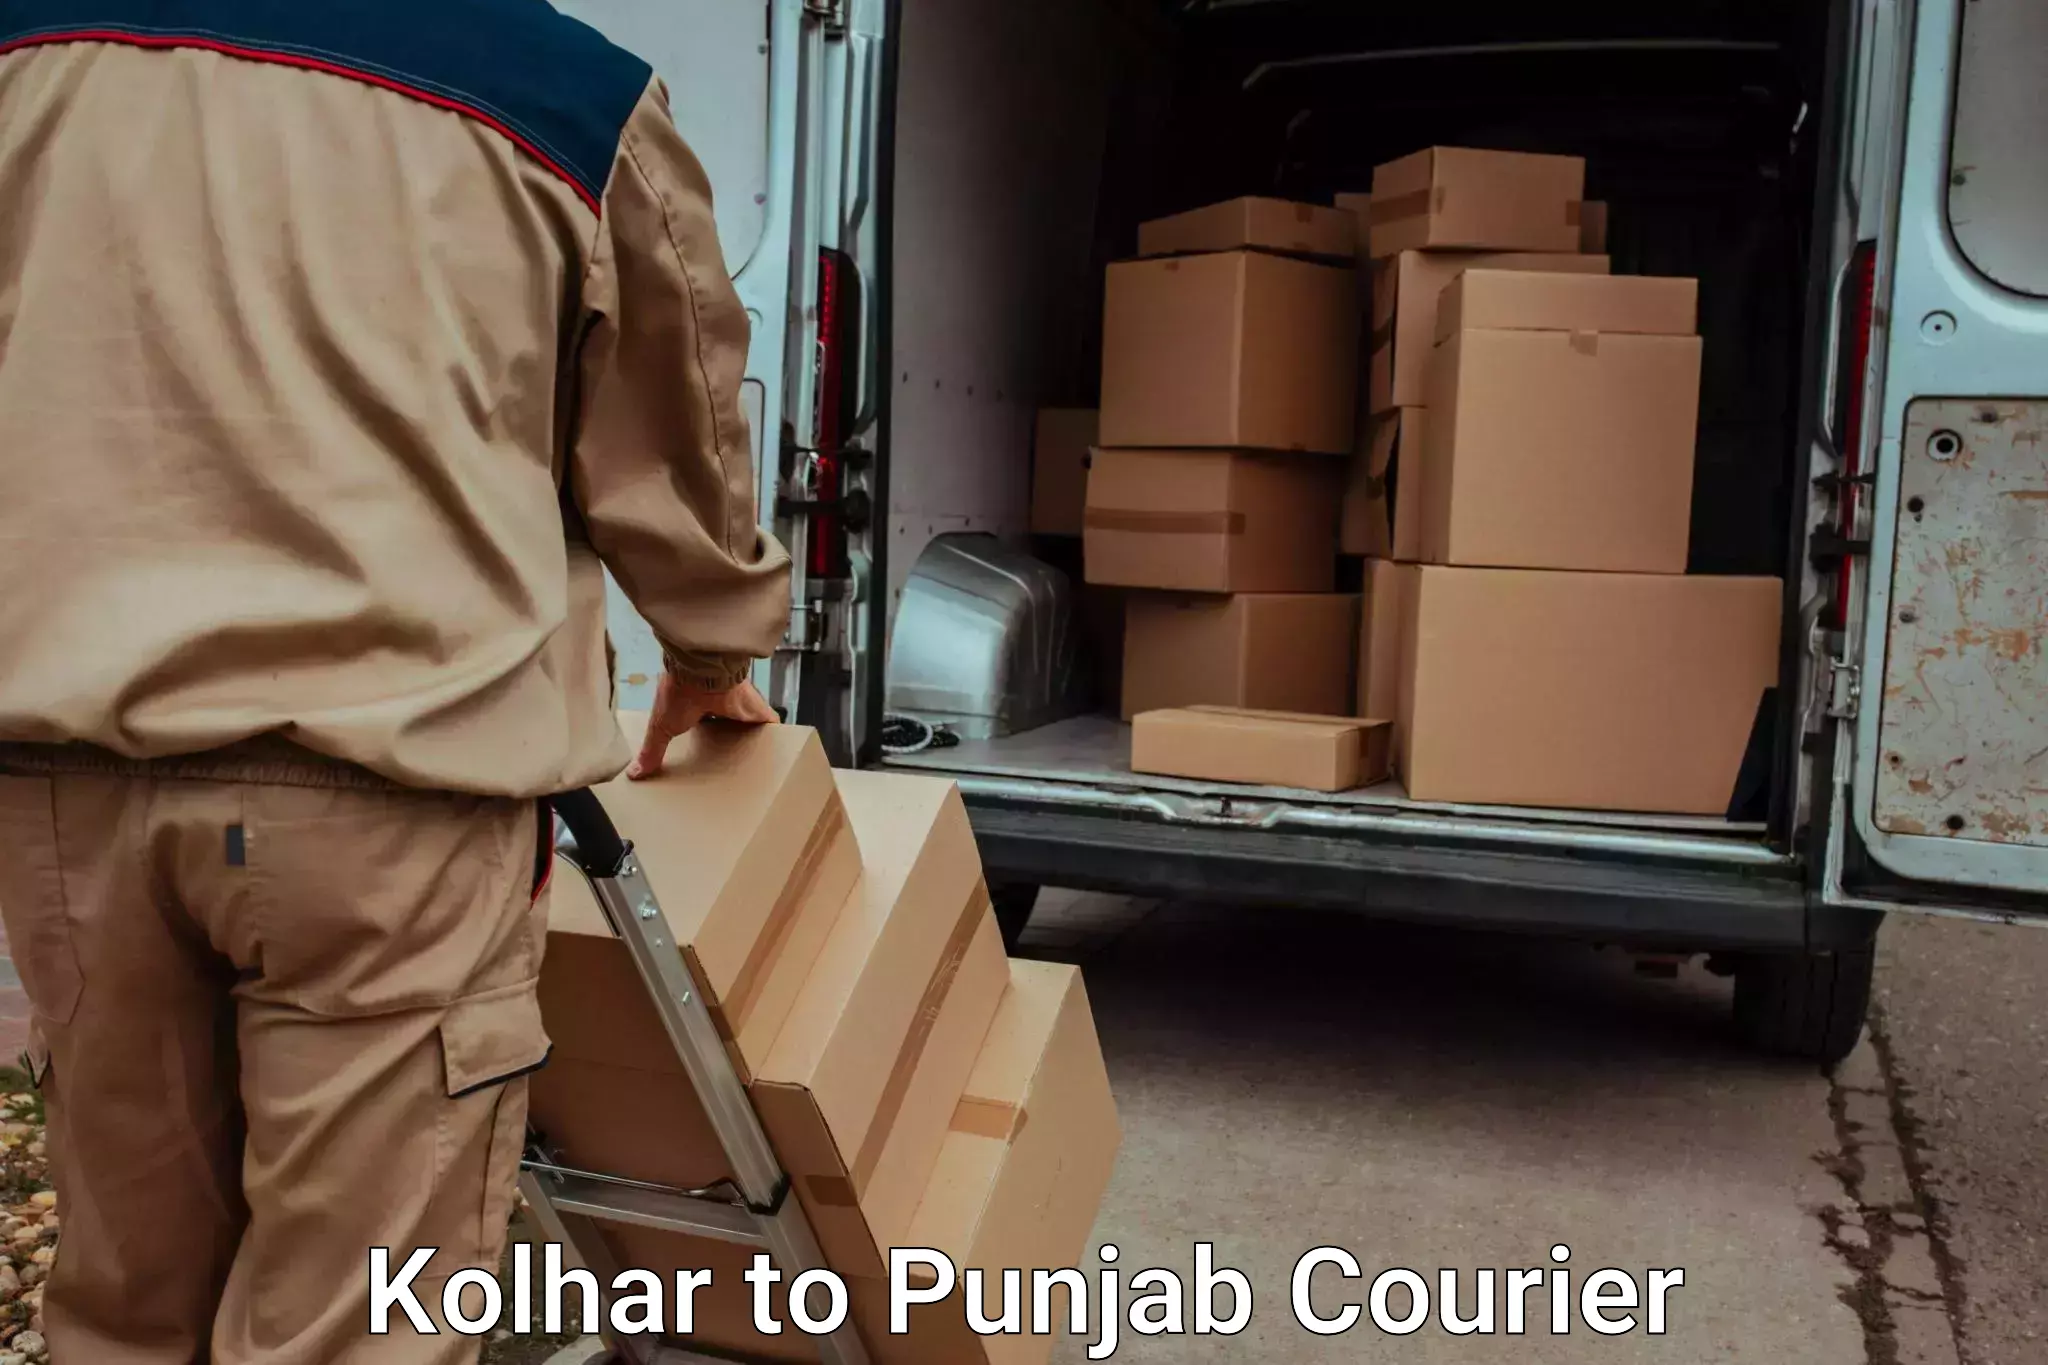 Doorstep luggage collection Kolhar to Punjab